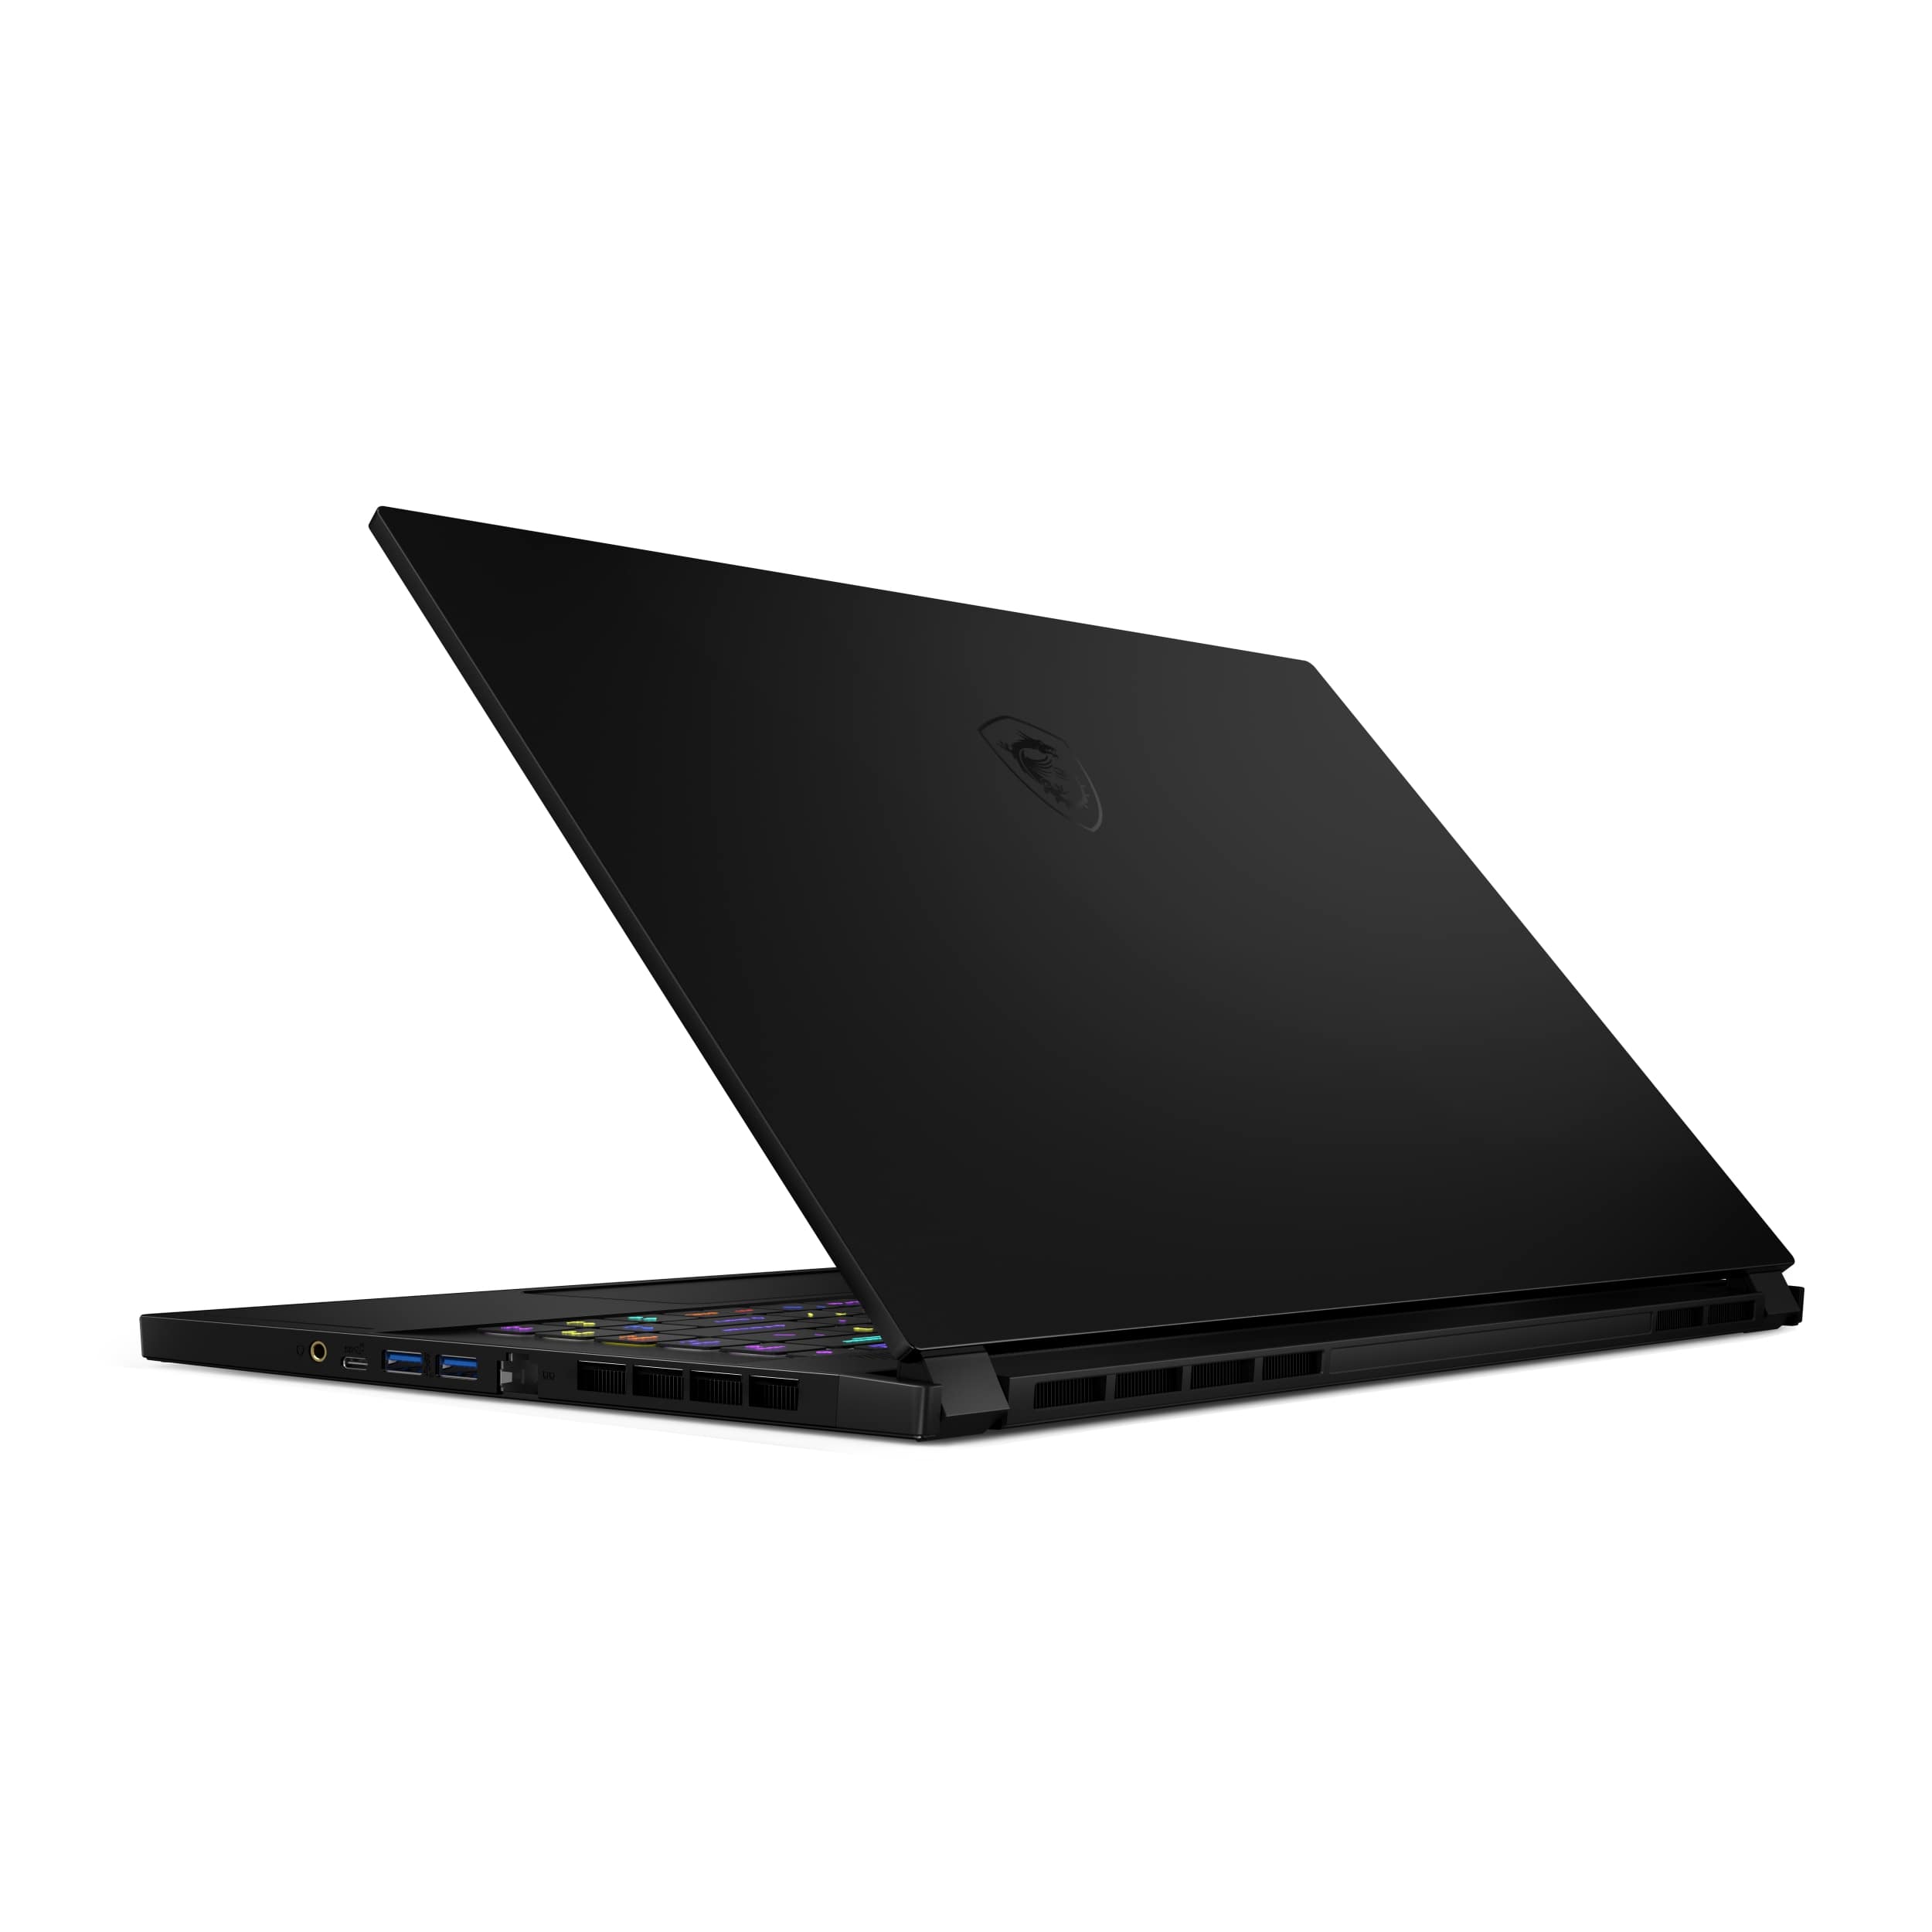 MSI GS66 Stealth 15.6" Gaming Laptop - Intel Core i7-10750H - 16GB - 512GB SSD - NVIDIA GeForce RTX2060 - Windows 10 Pro - Core Black - image 4 of 5